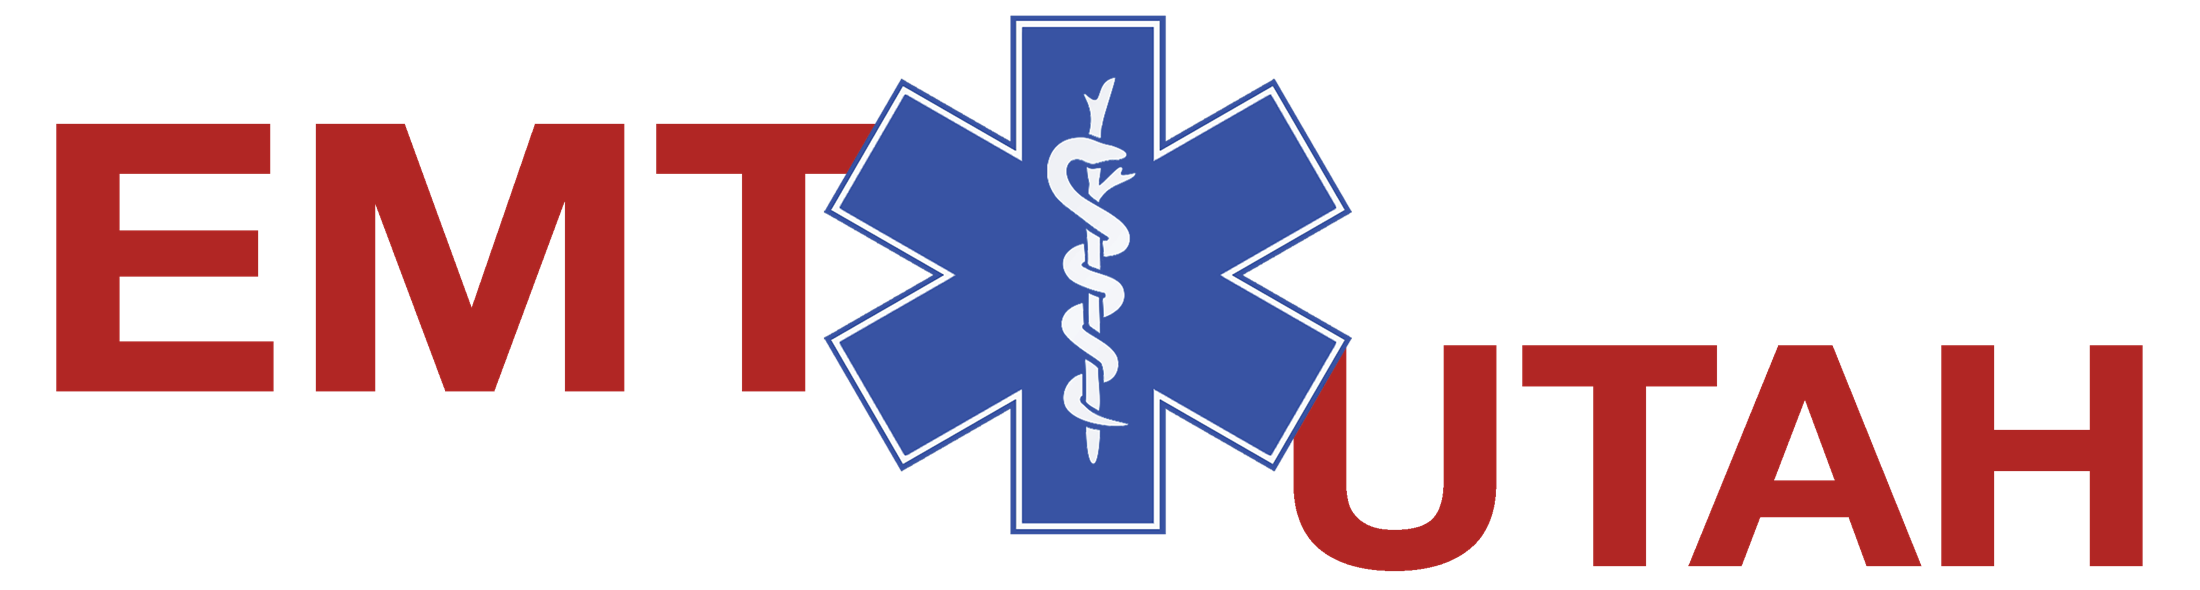 EMT Utah logo